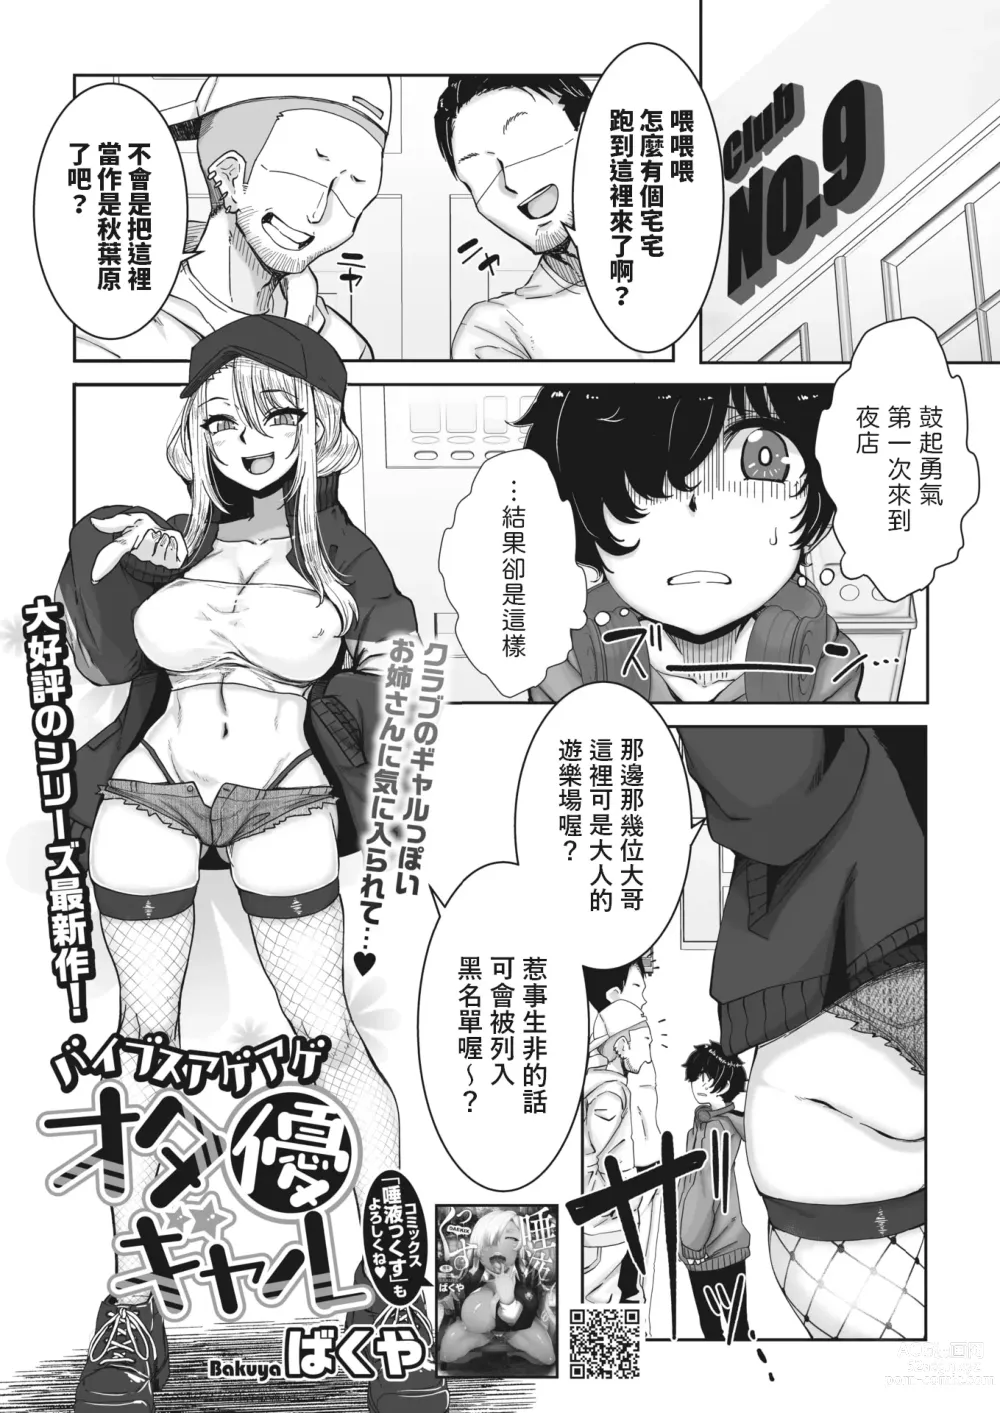 Page 1 of manga Baibusuageageota Yuu Gal